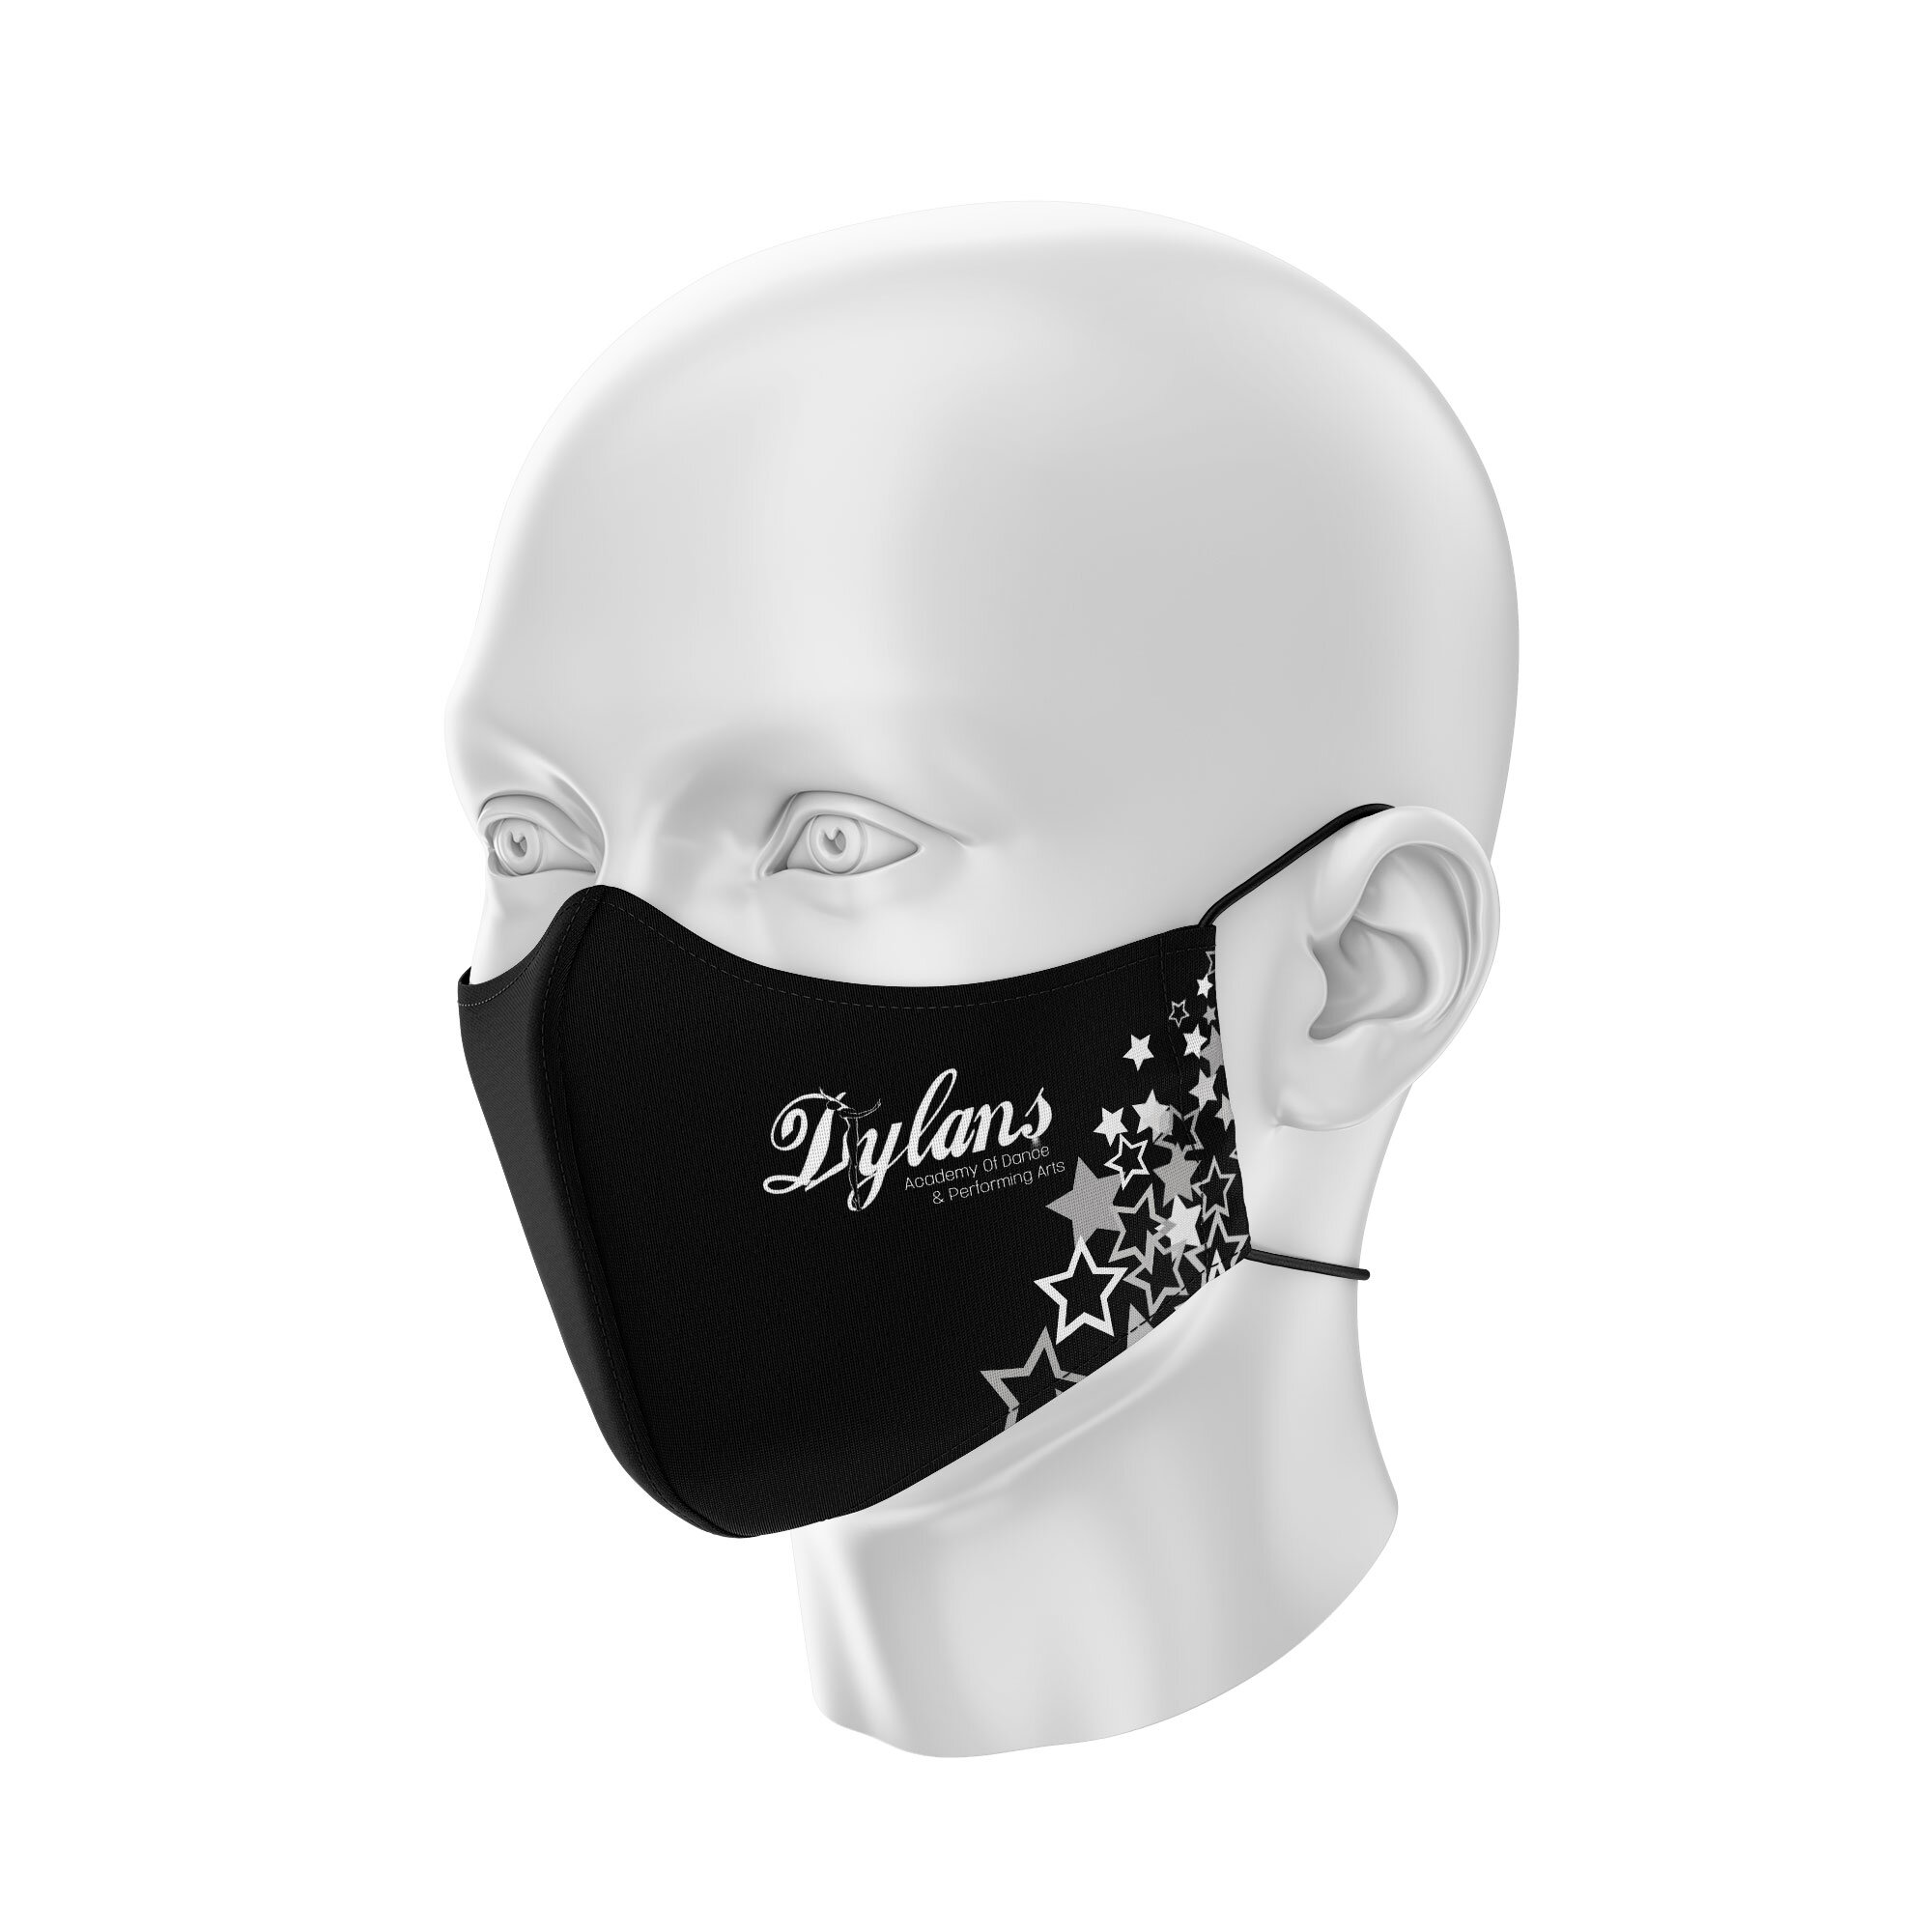 Dylans School of Dance Printed Face Masks